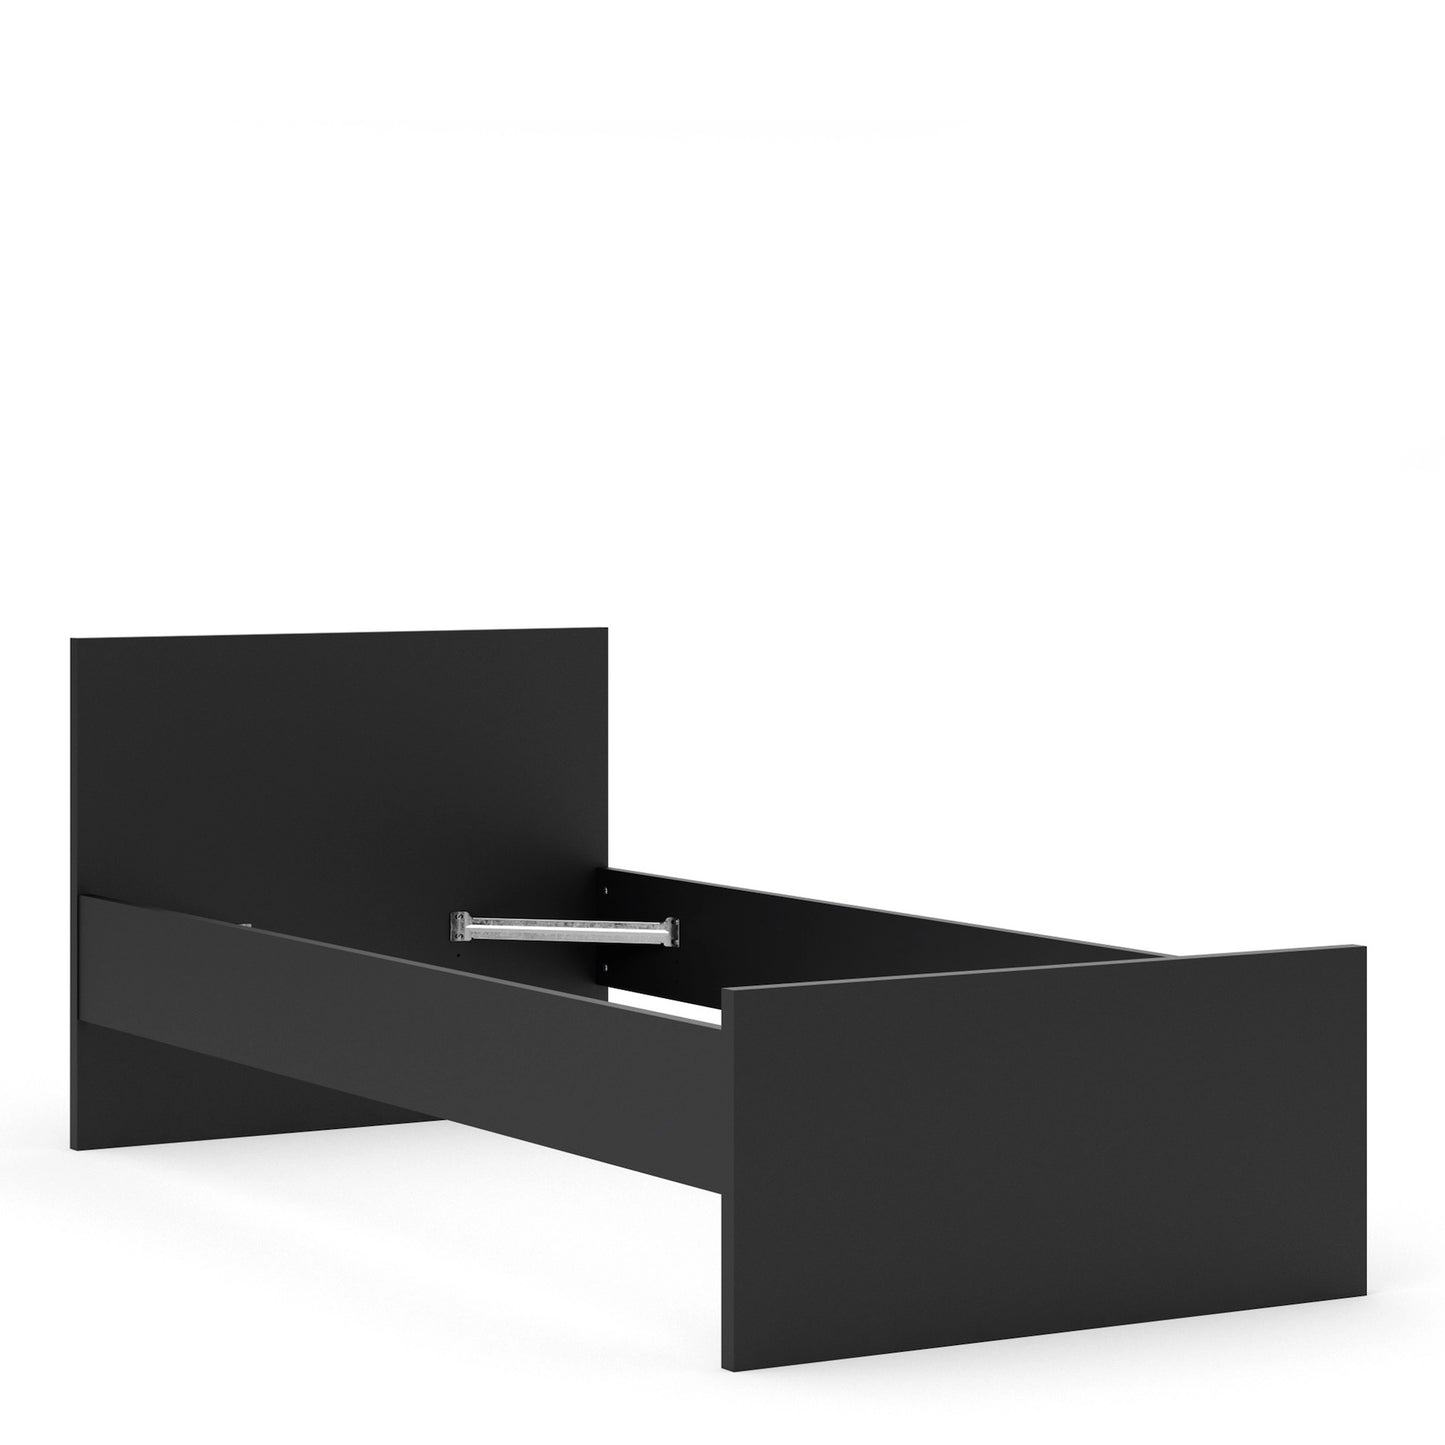 Furniture To Go Naia 3ft Single Bed in Black Matt